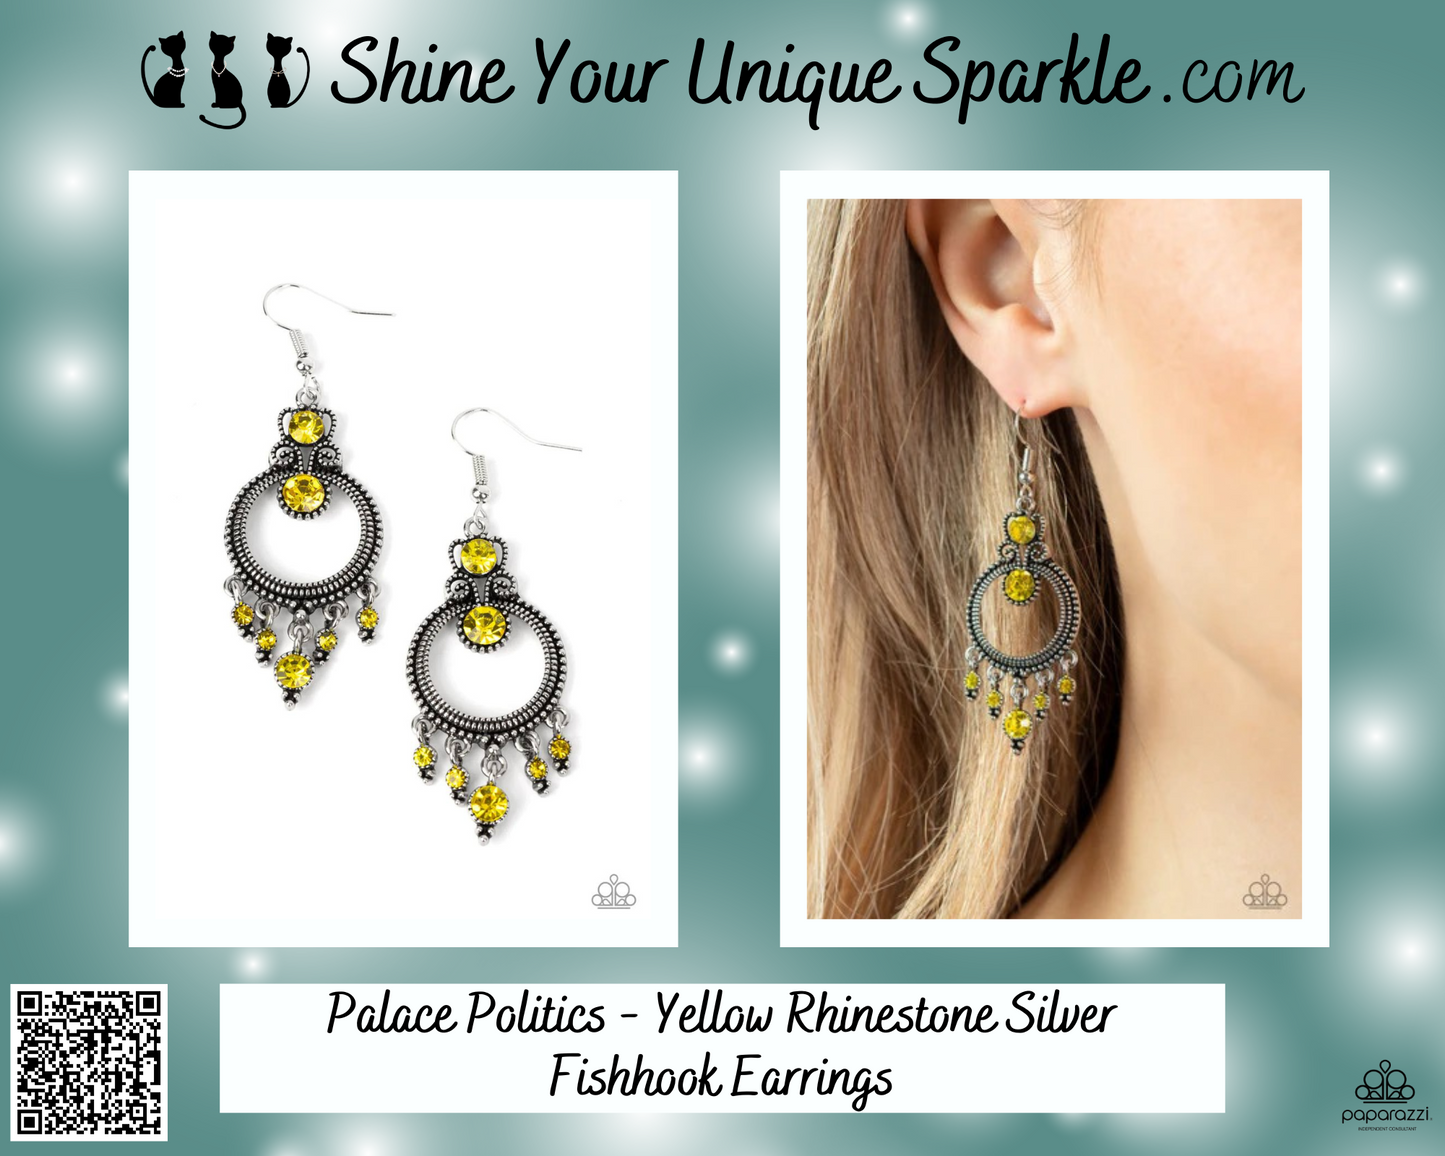 Palace Politics - Yellow Rhinestone Silver Fishhook Earrings